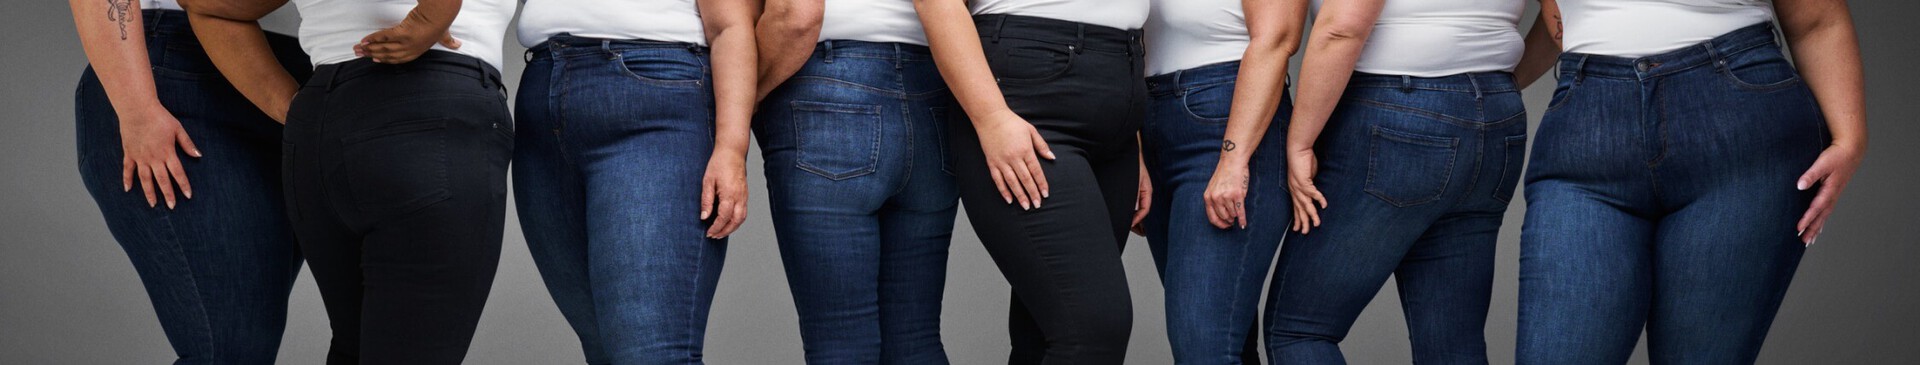 1 et par jeans – 3 kroppsfasonger 